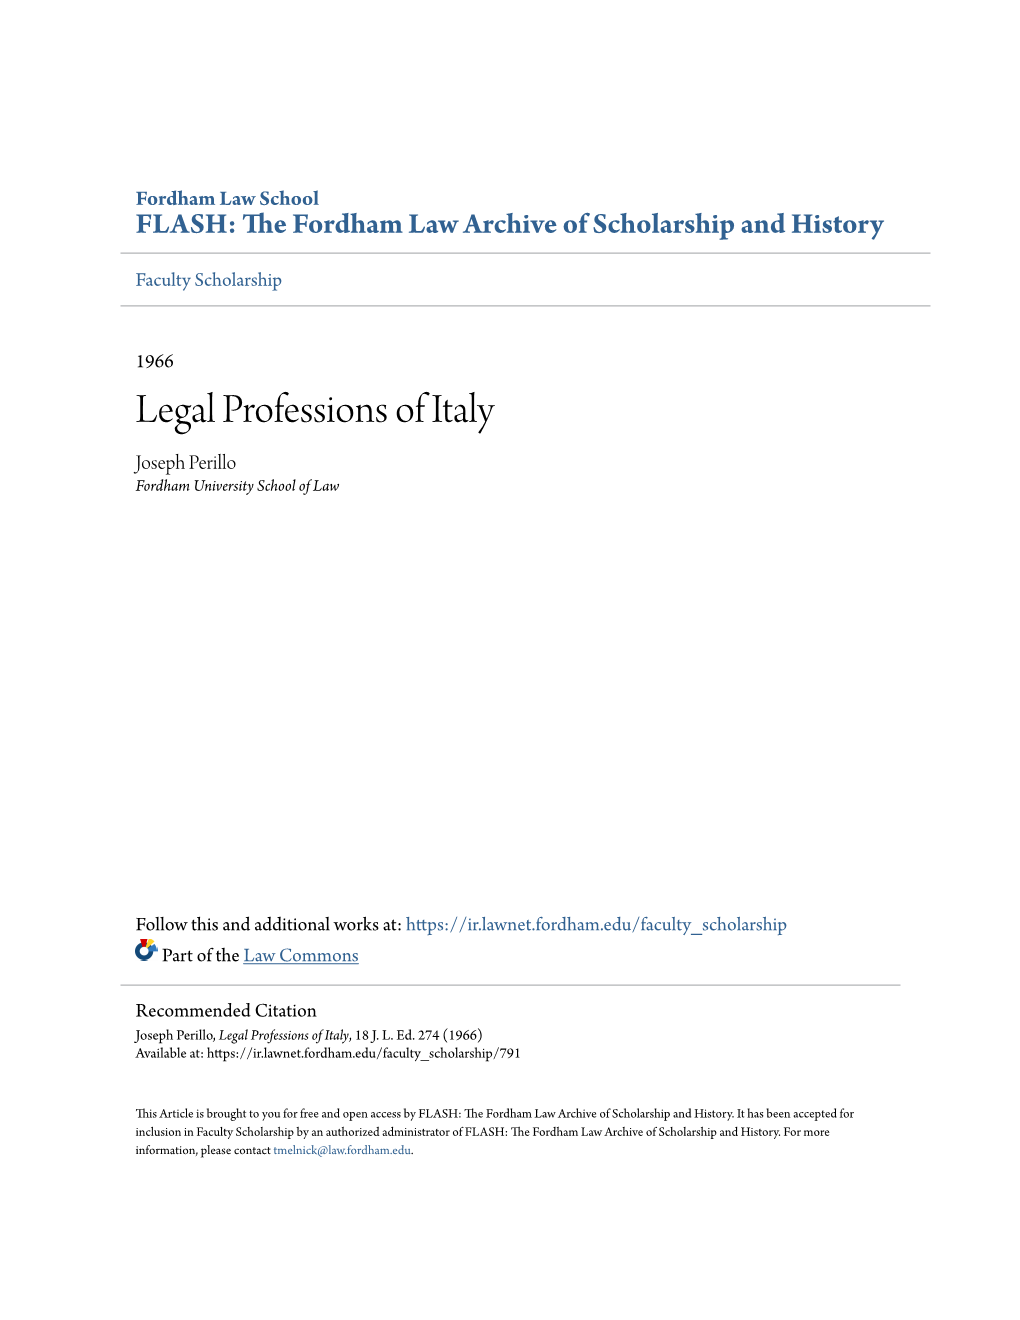 Legal Professions of Italy Joseph Perillo Fordham University School of Law